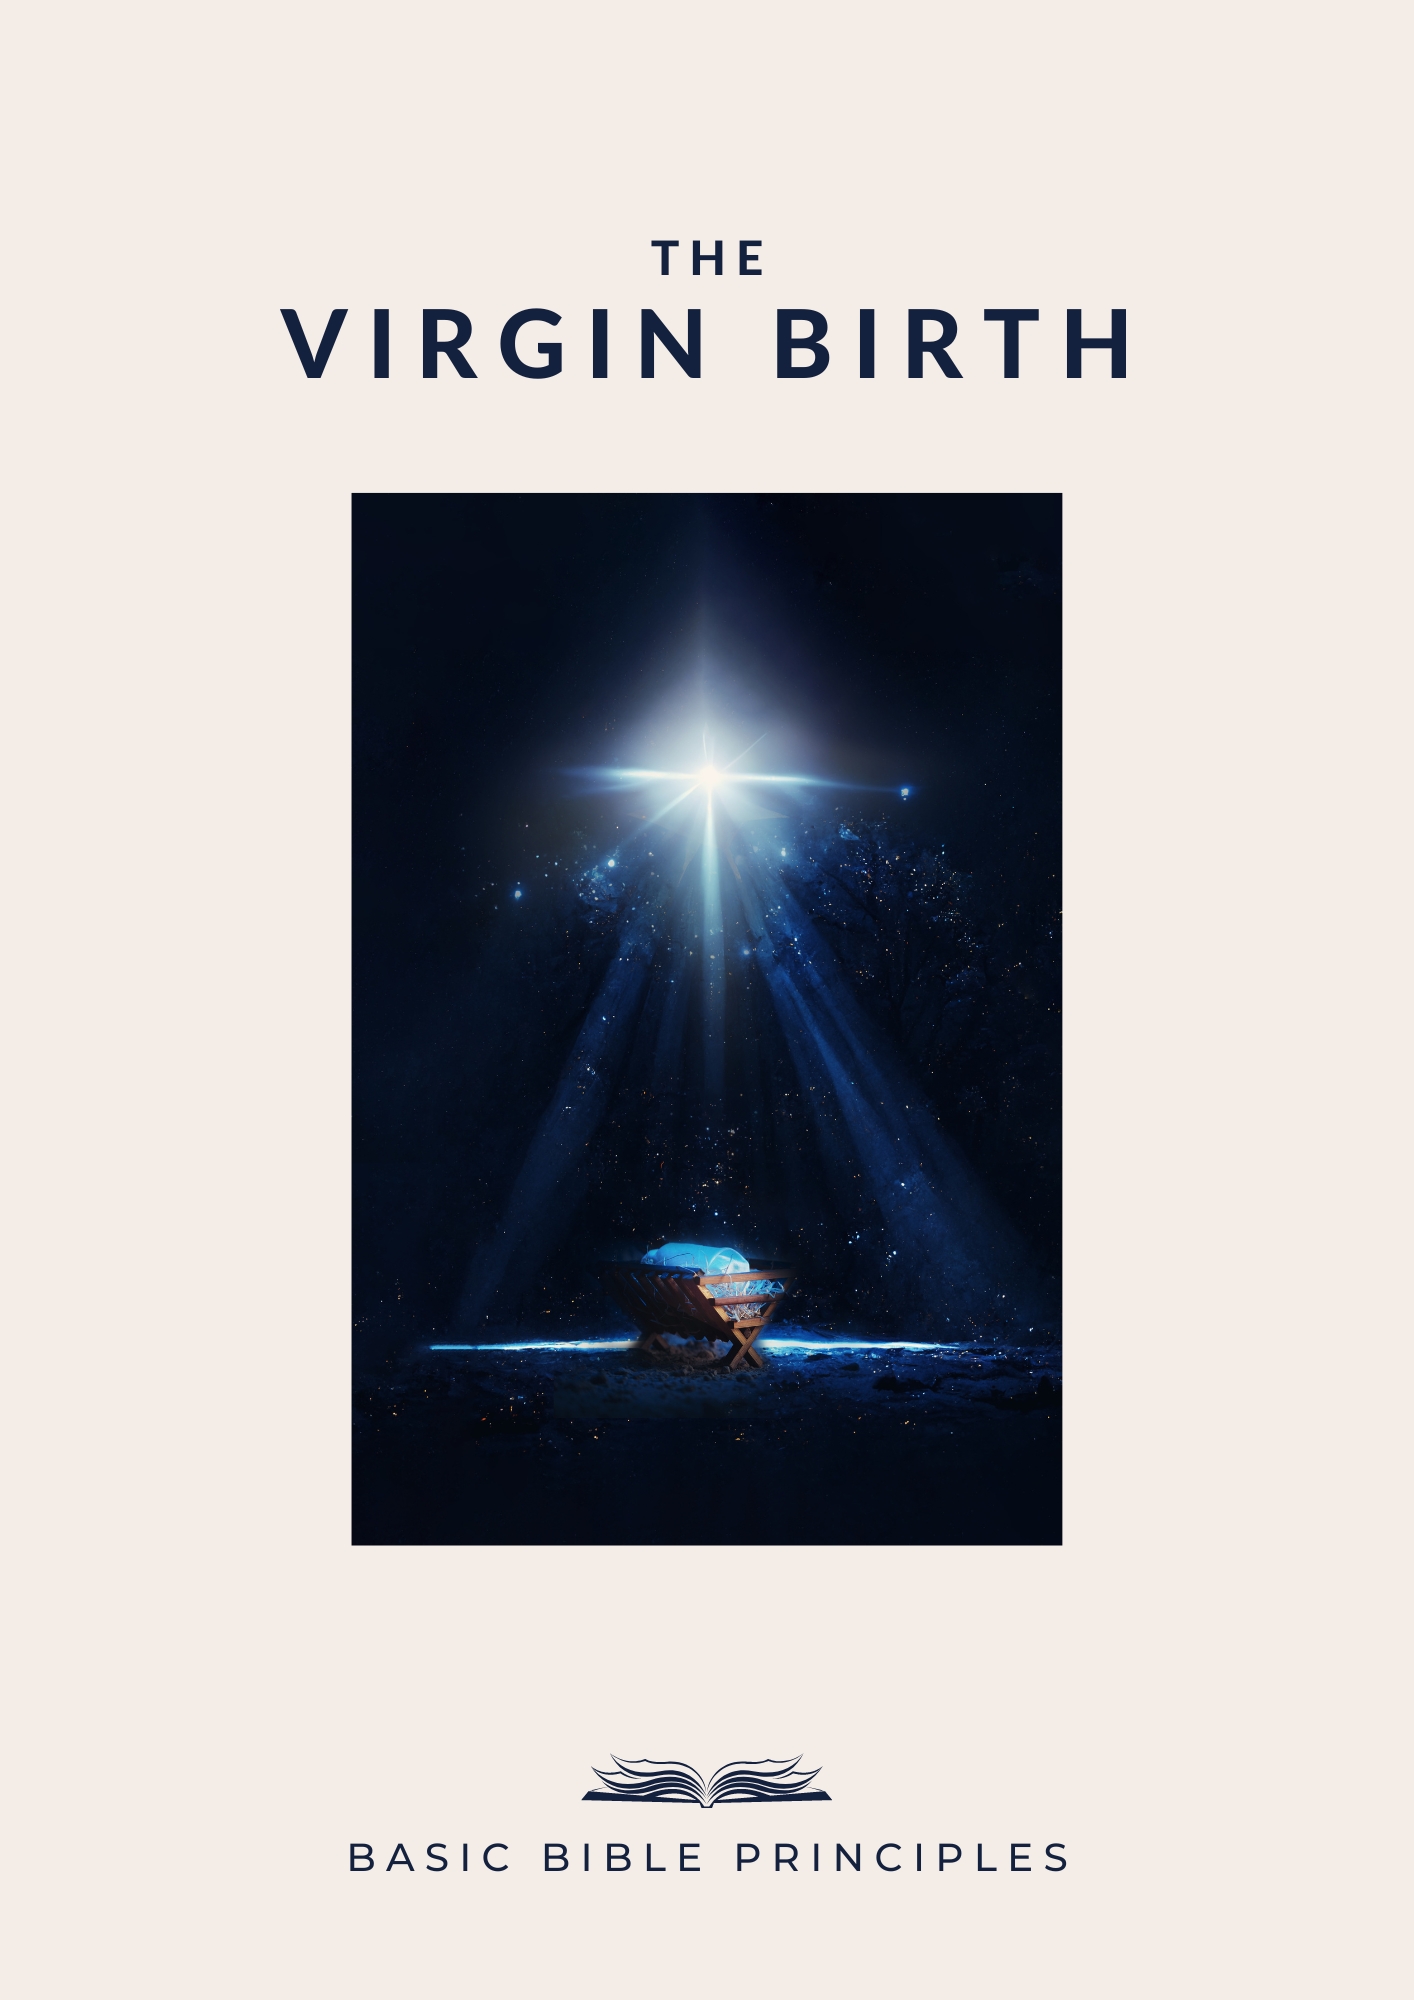 Basic Bible Principles: THE VIRGIN BIRTH